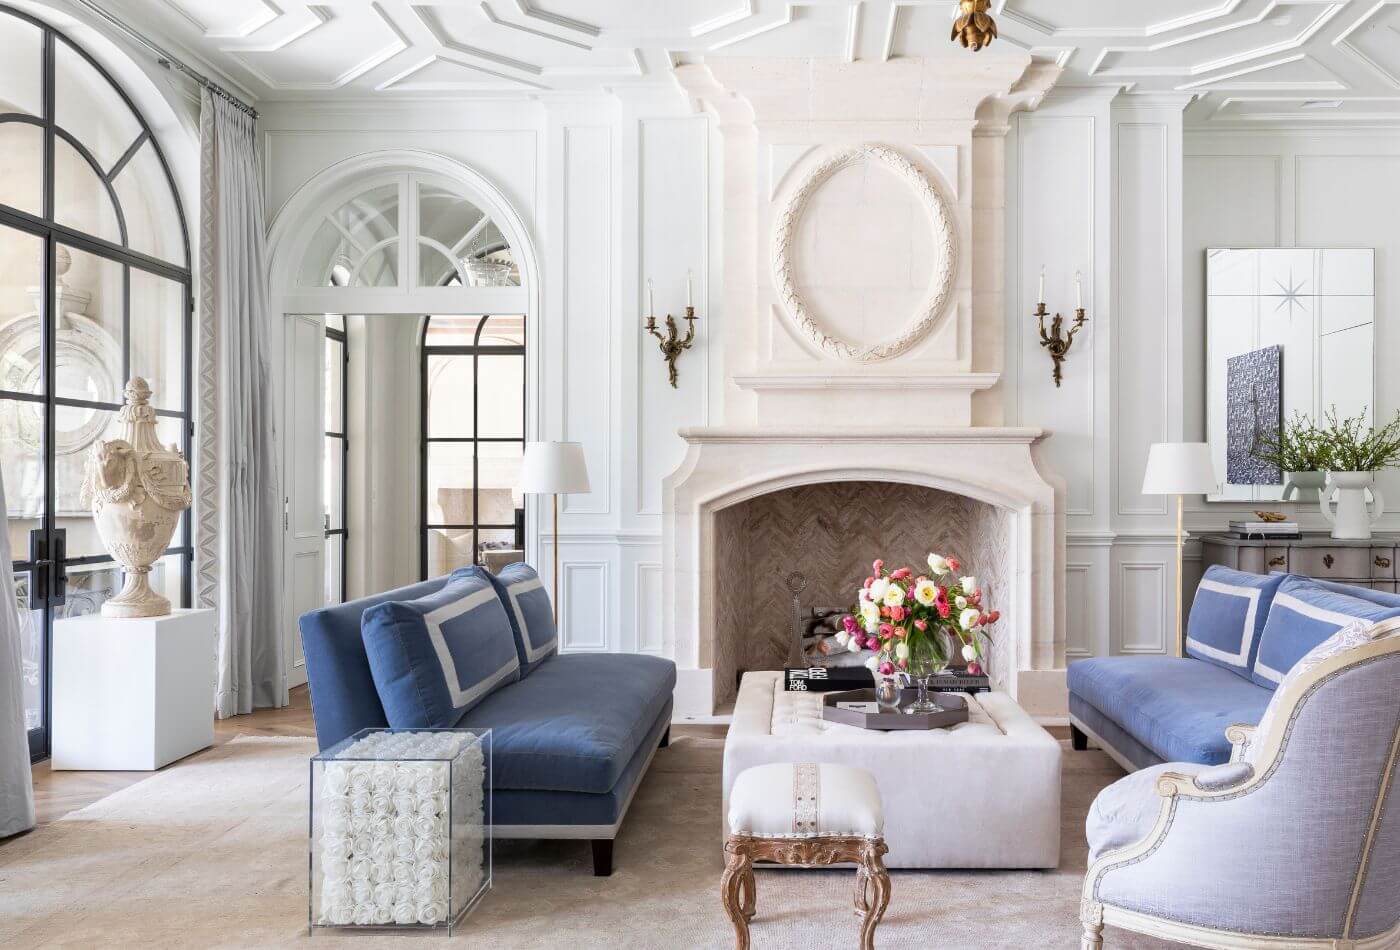 Go Big With Neoclassical Interior Design